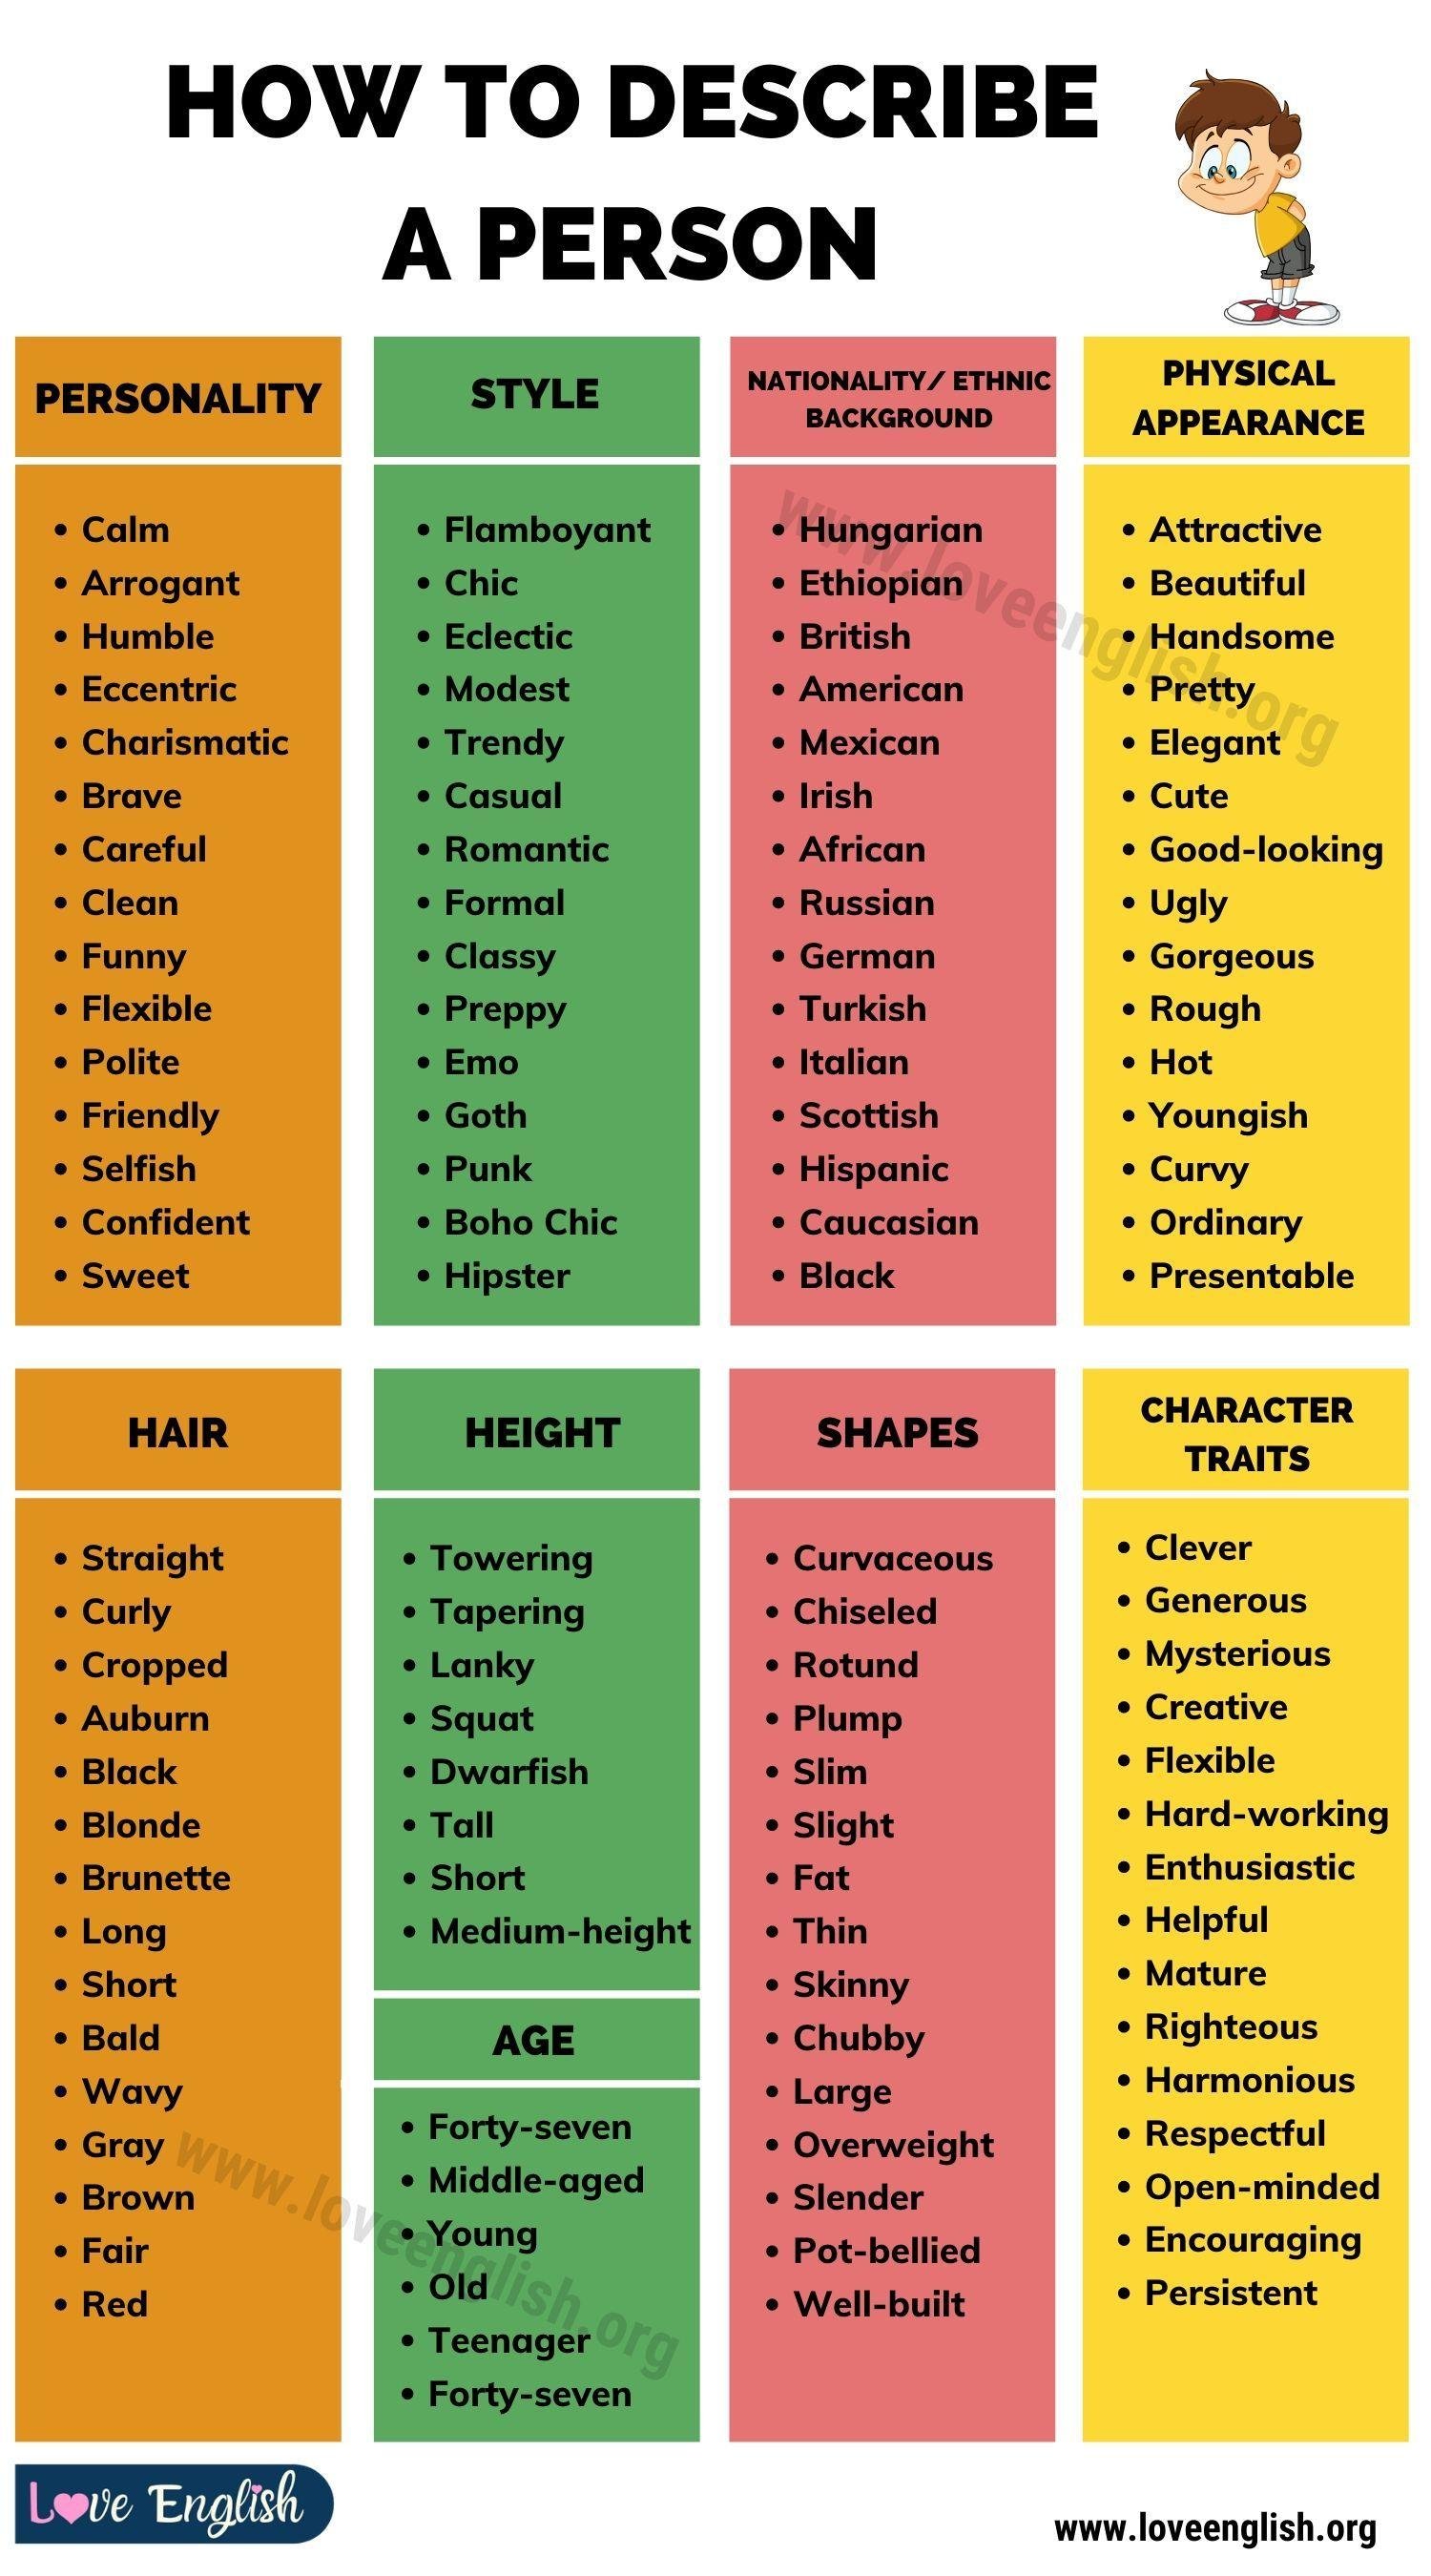 Grammar Corner Adjectives for Describing People in English